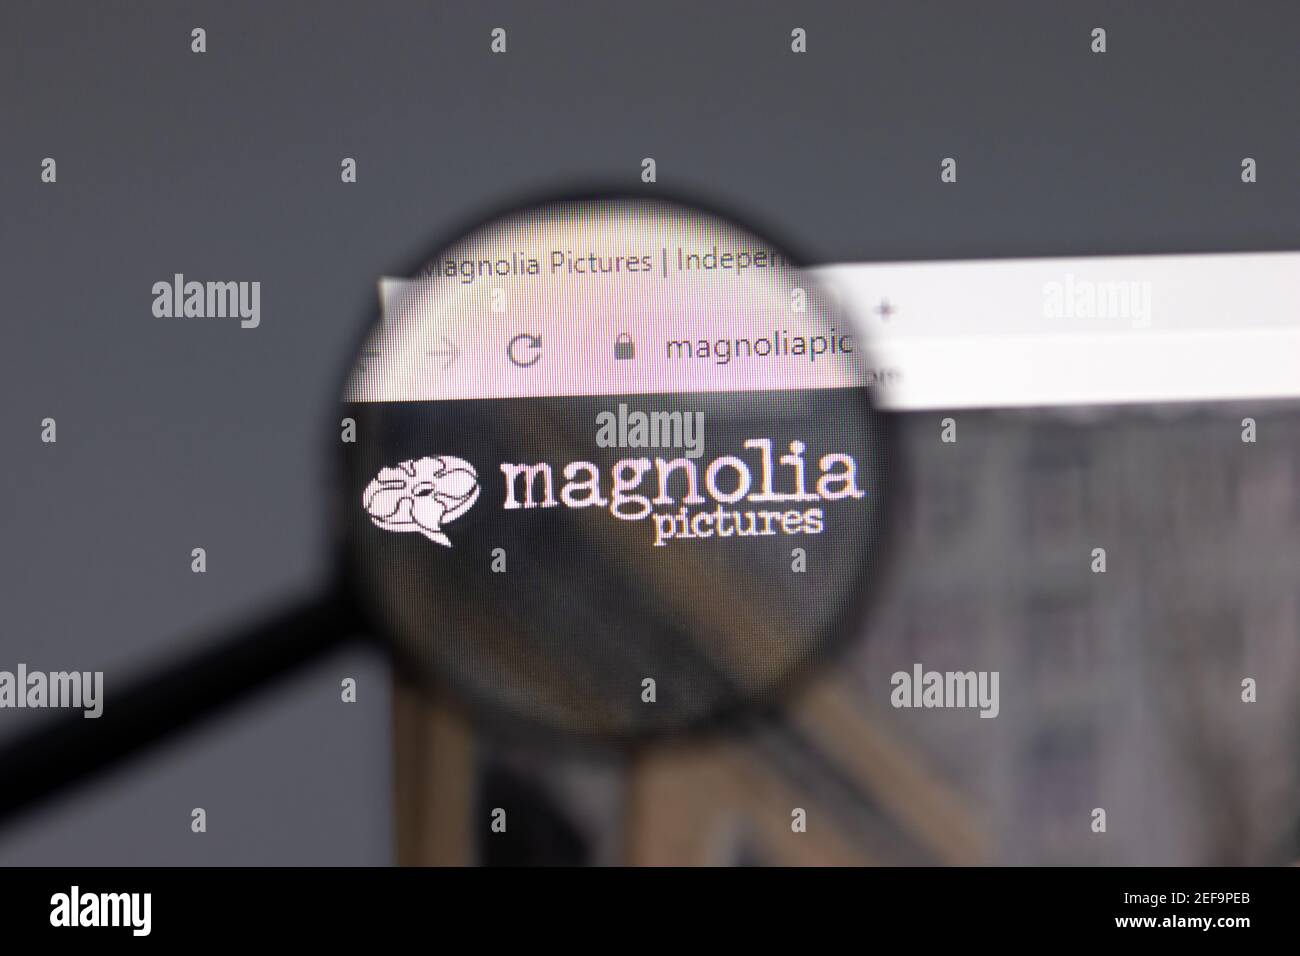 New York, USA - 15. Februar 2021: Magnolia Pictures Website im Browser mit Firmenlogo, illustrative Editorial Stockfoto